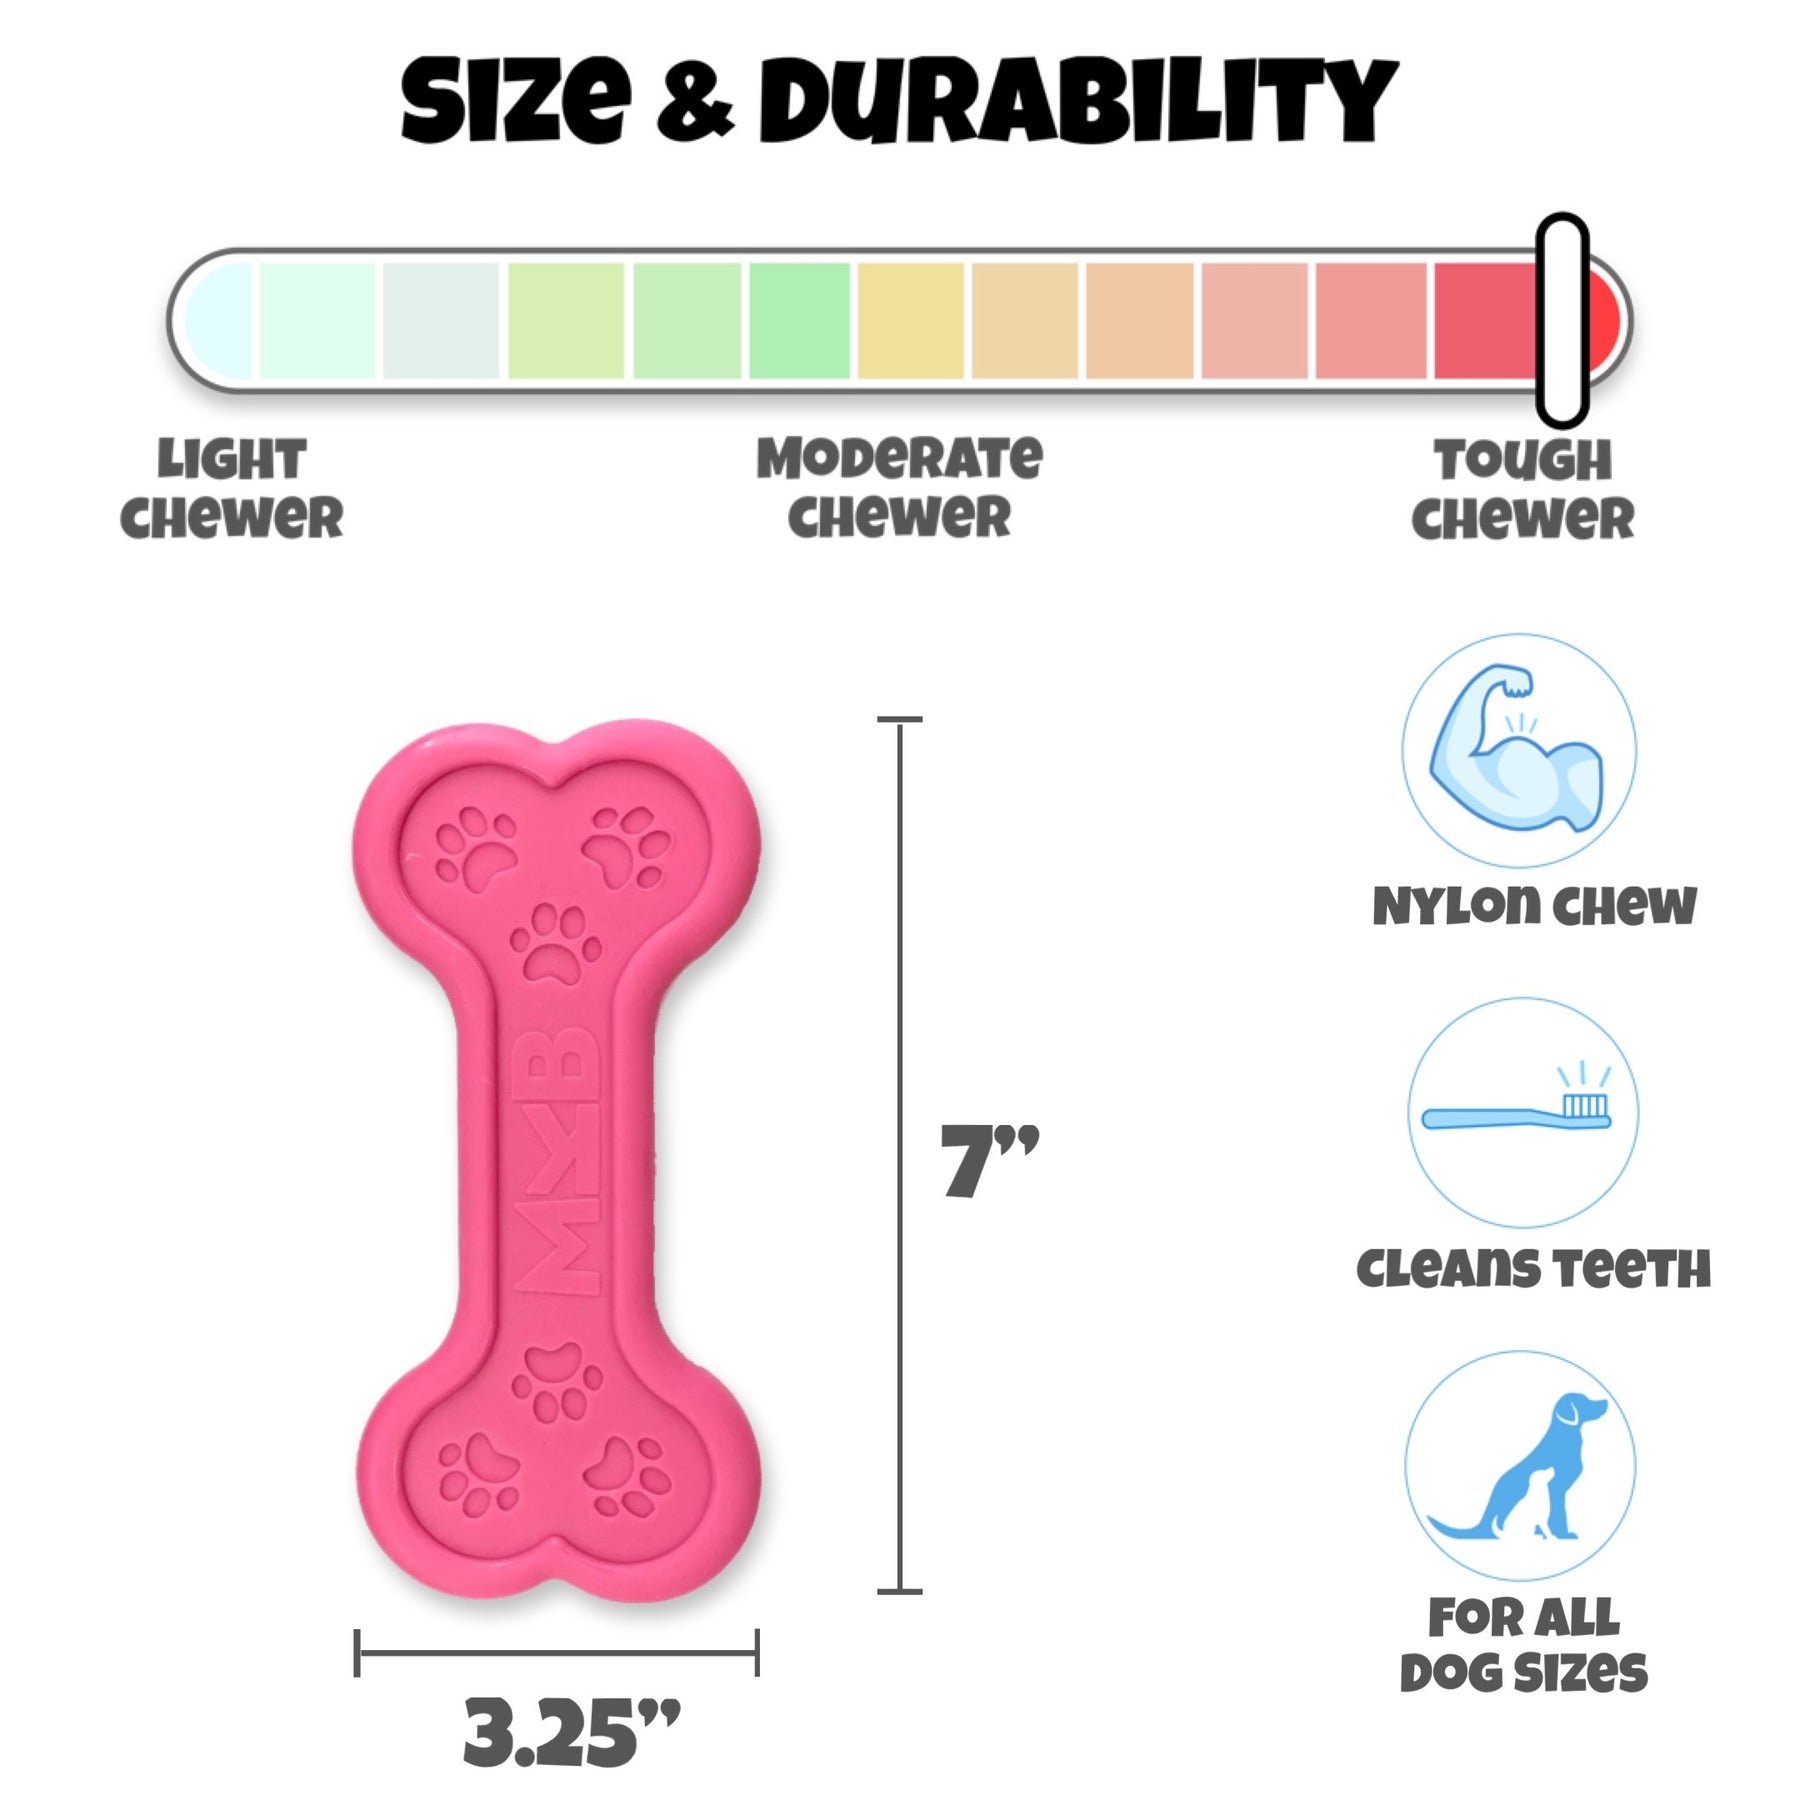 Durable Nylon Dog Toy Durability Chart